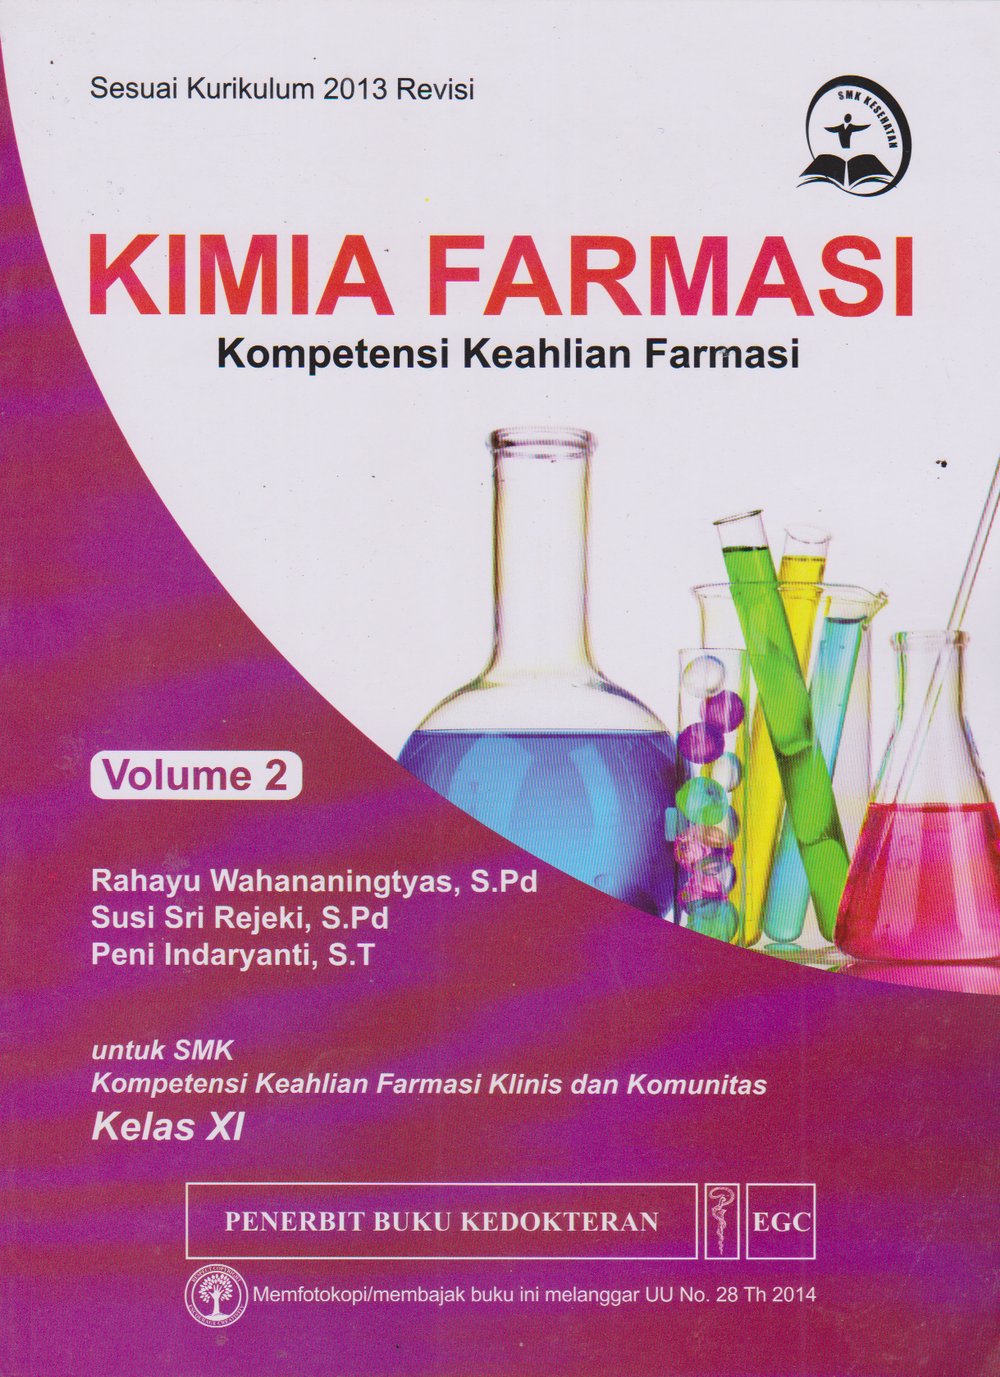 download silabus smk farmasi kelas xi kimia pdf